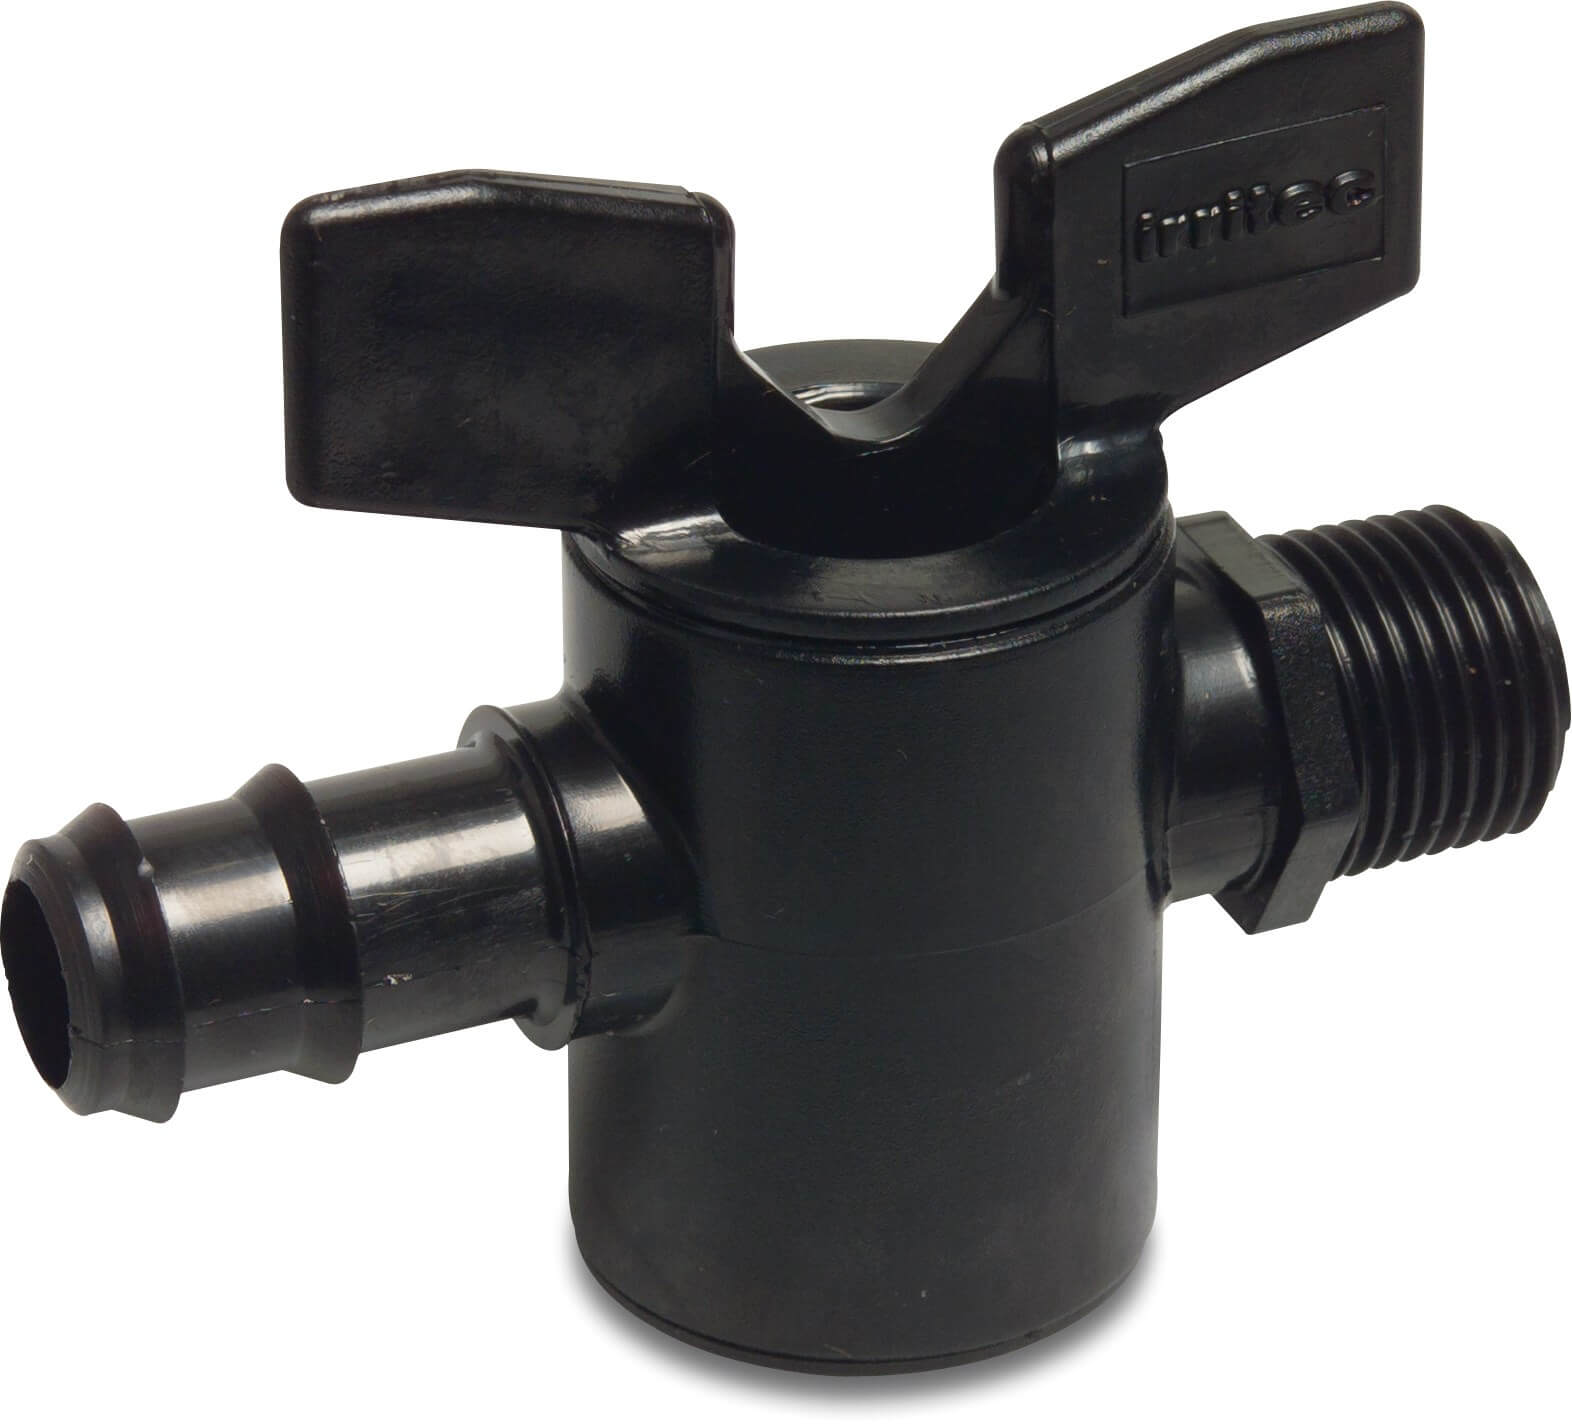 Plug valve PP 12 mm x 1/2" barbed x male thread 6bar black/red